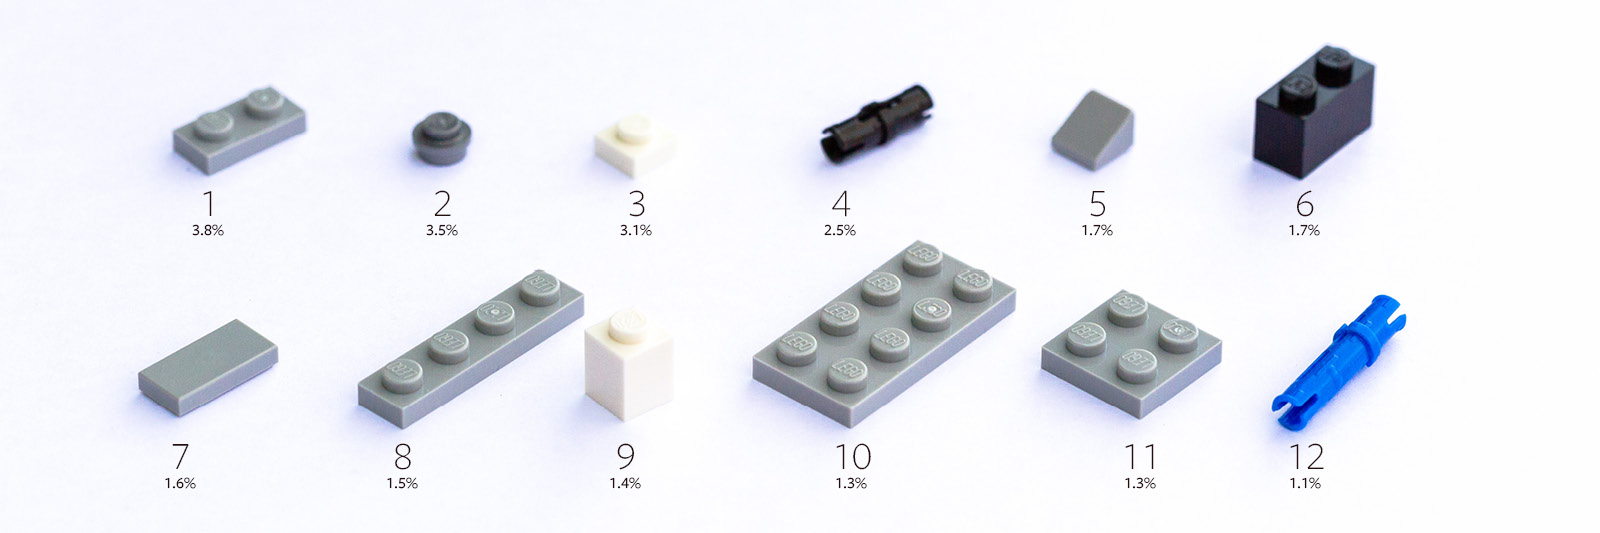 White Slope 30 1 x 1 x 2/3 No 54200 LEGO Parts QTY 25